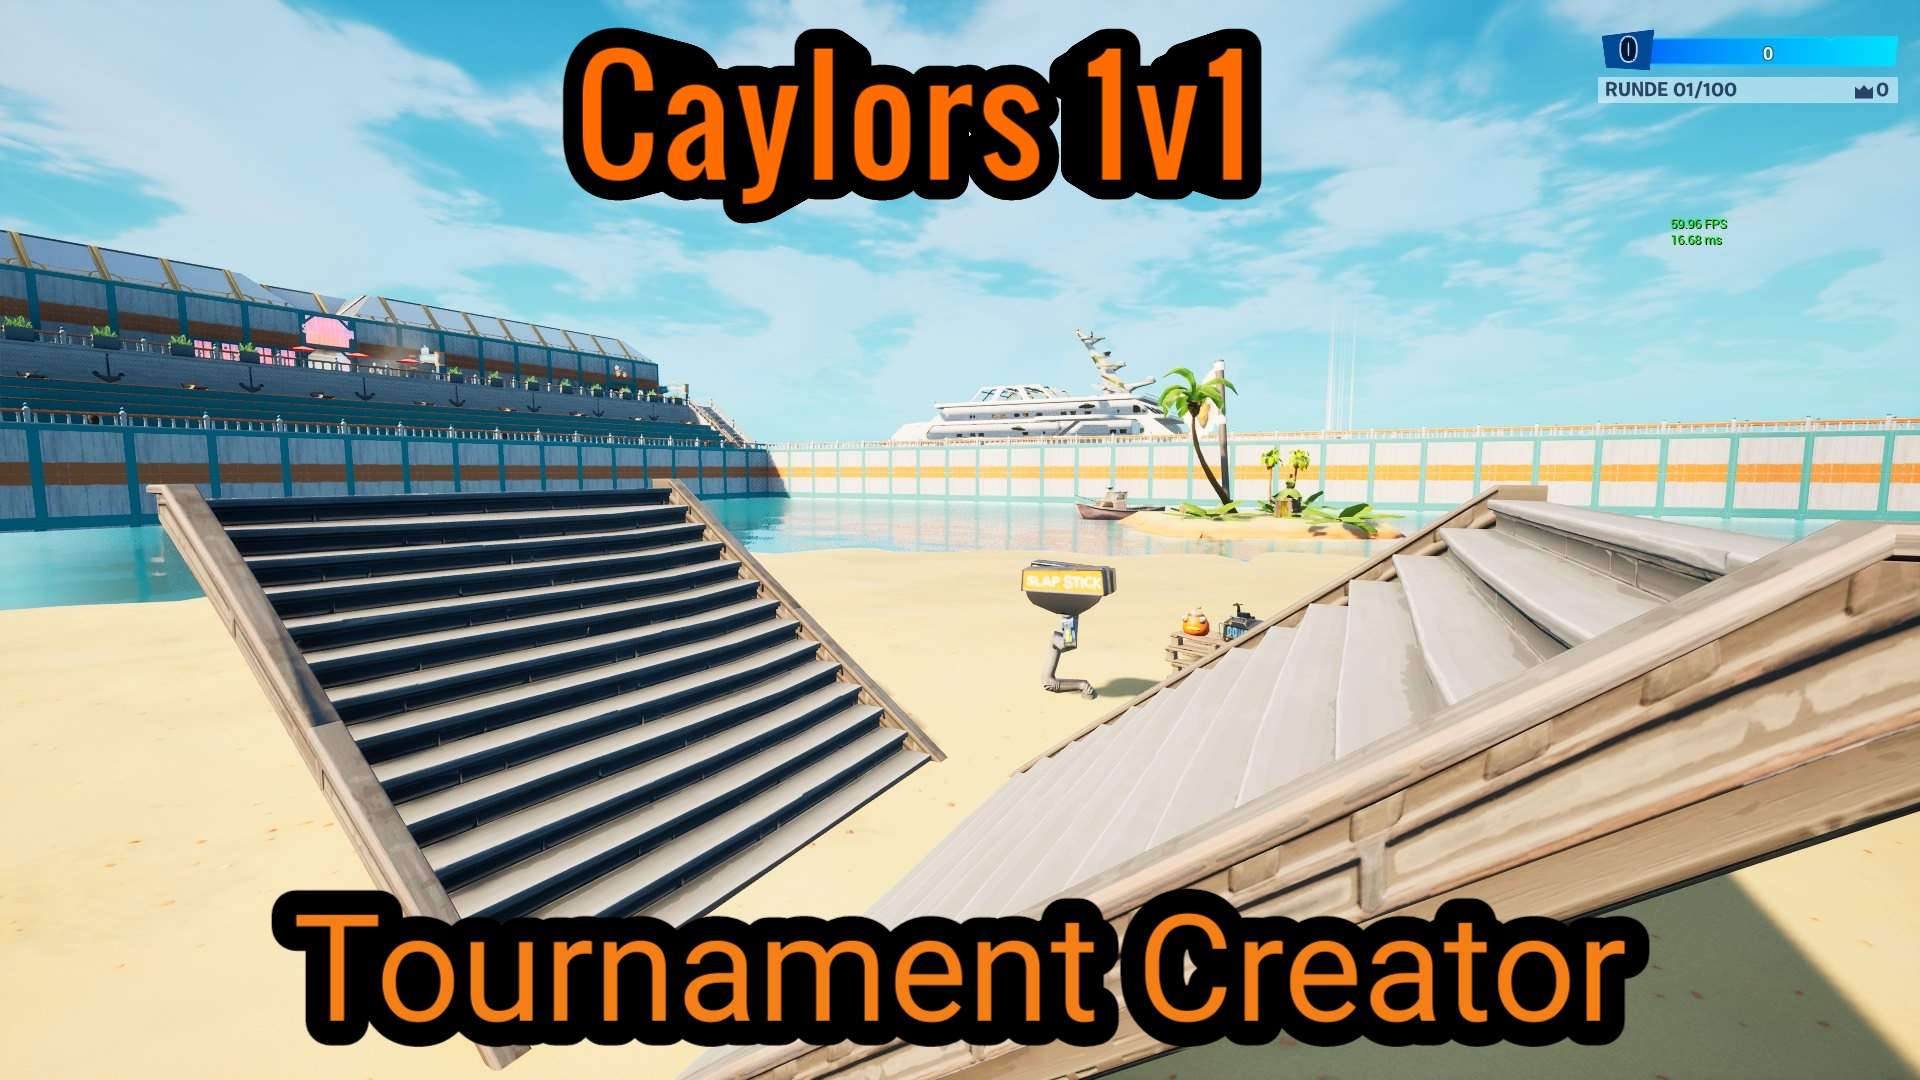 CAYLORS 1V1 TOURNAMENT CREATOR